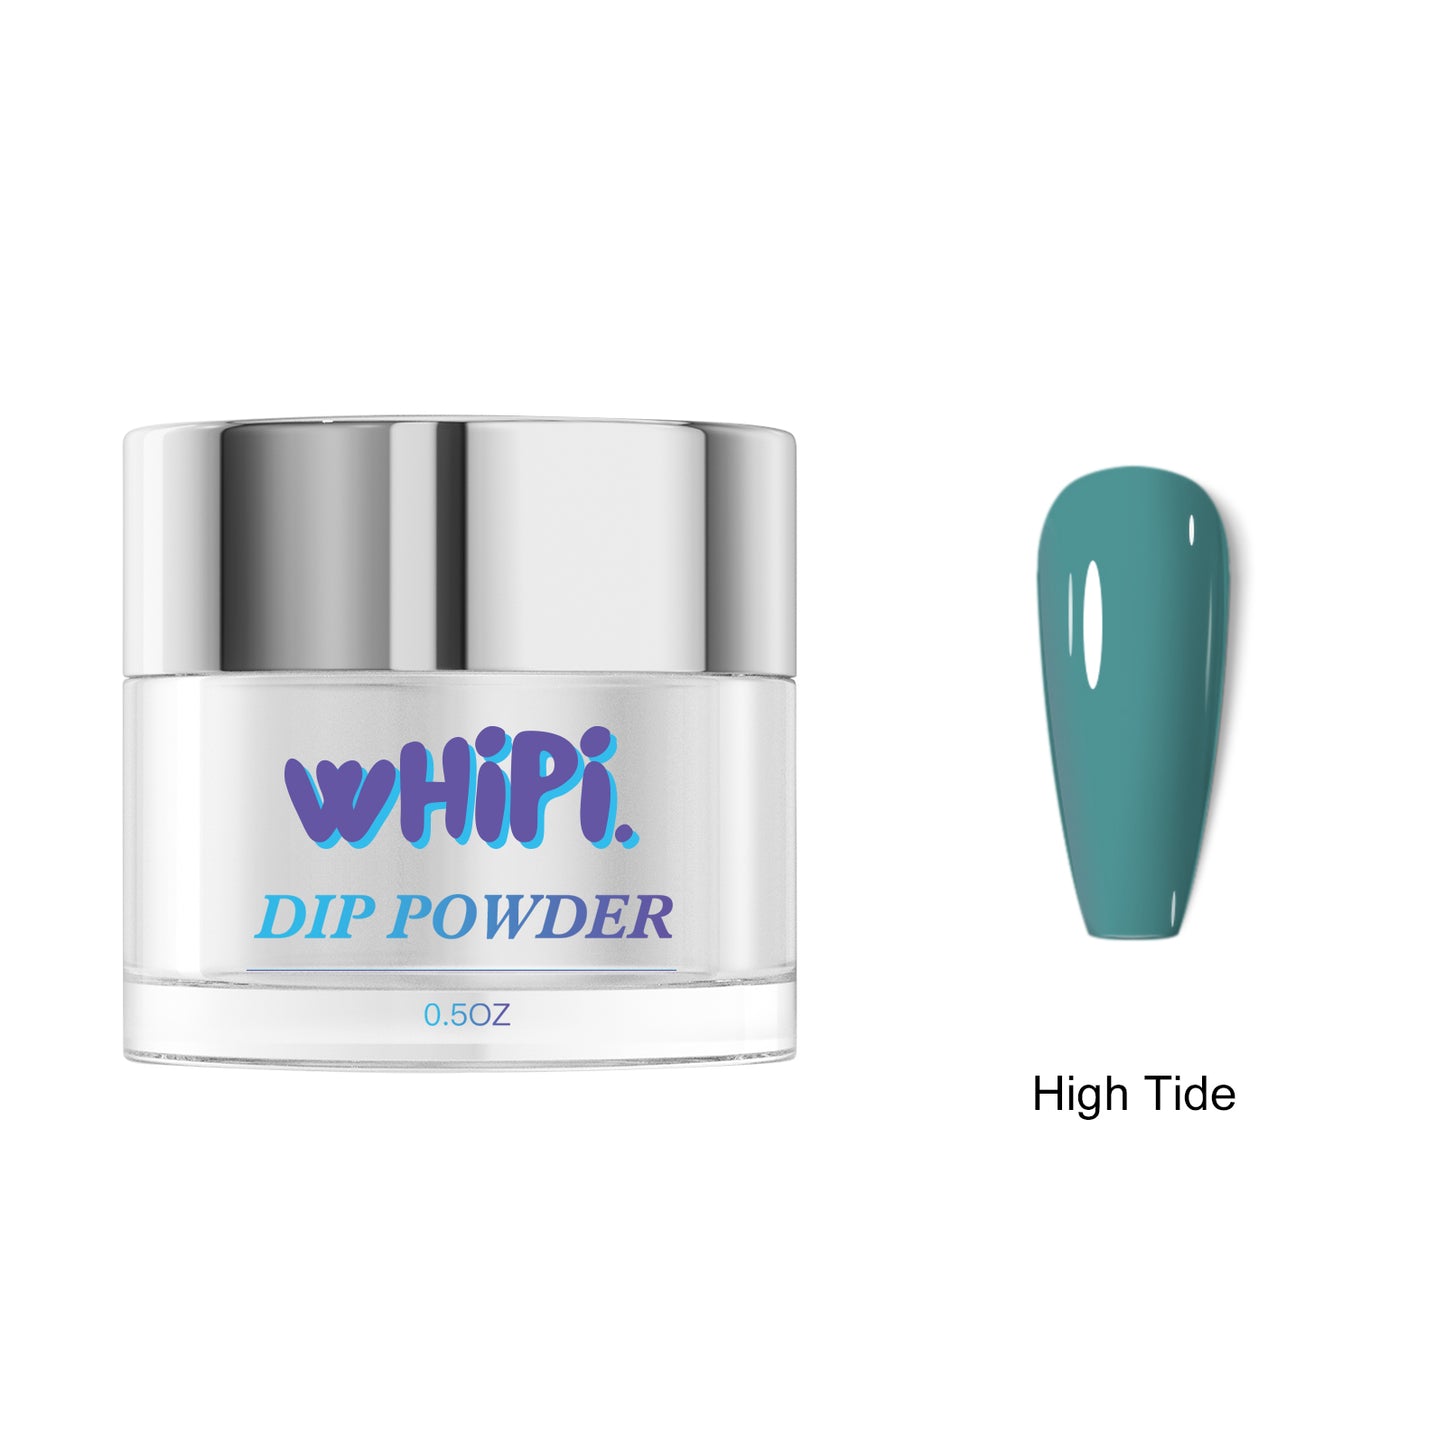 High Tide Dip Powder